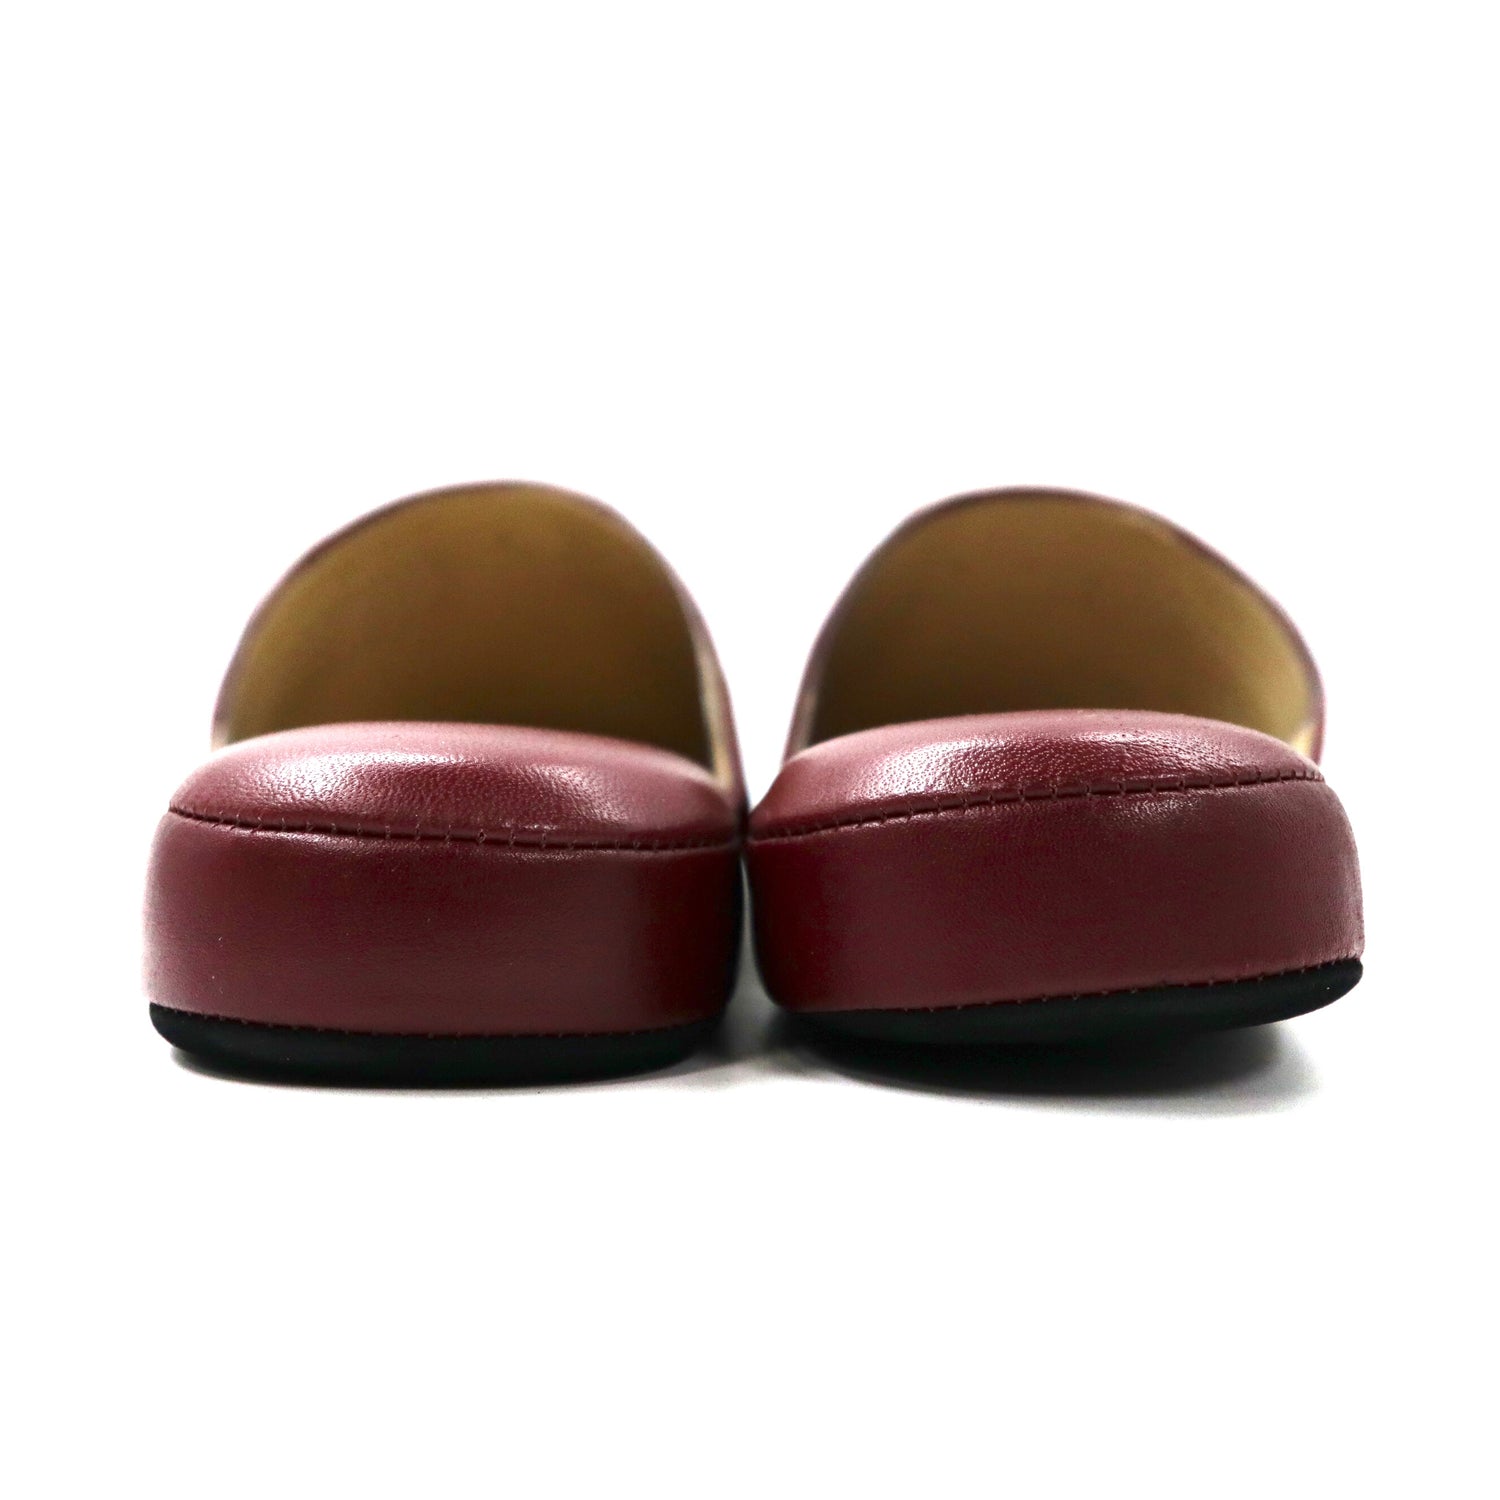 Yves Saint Laurent Room Shoes Slippers US7 BORDEAUX Leather